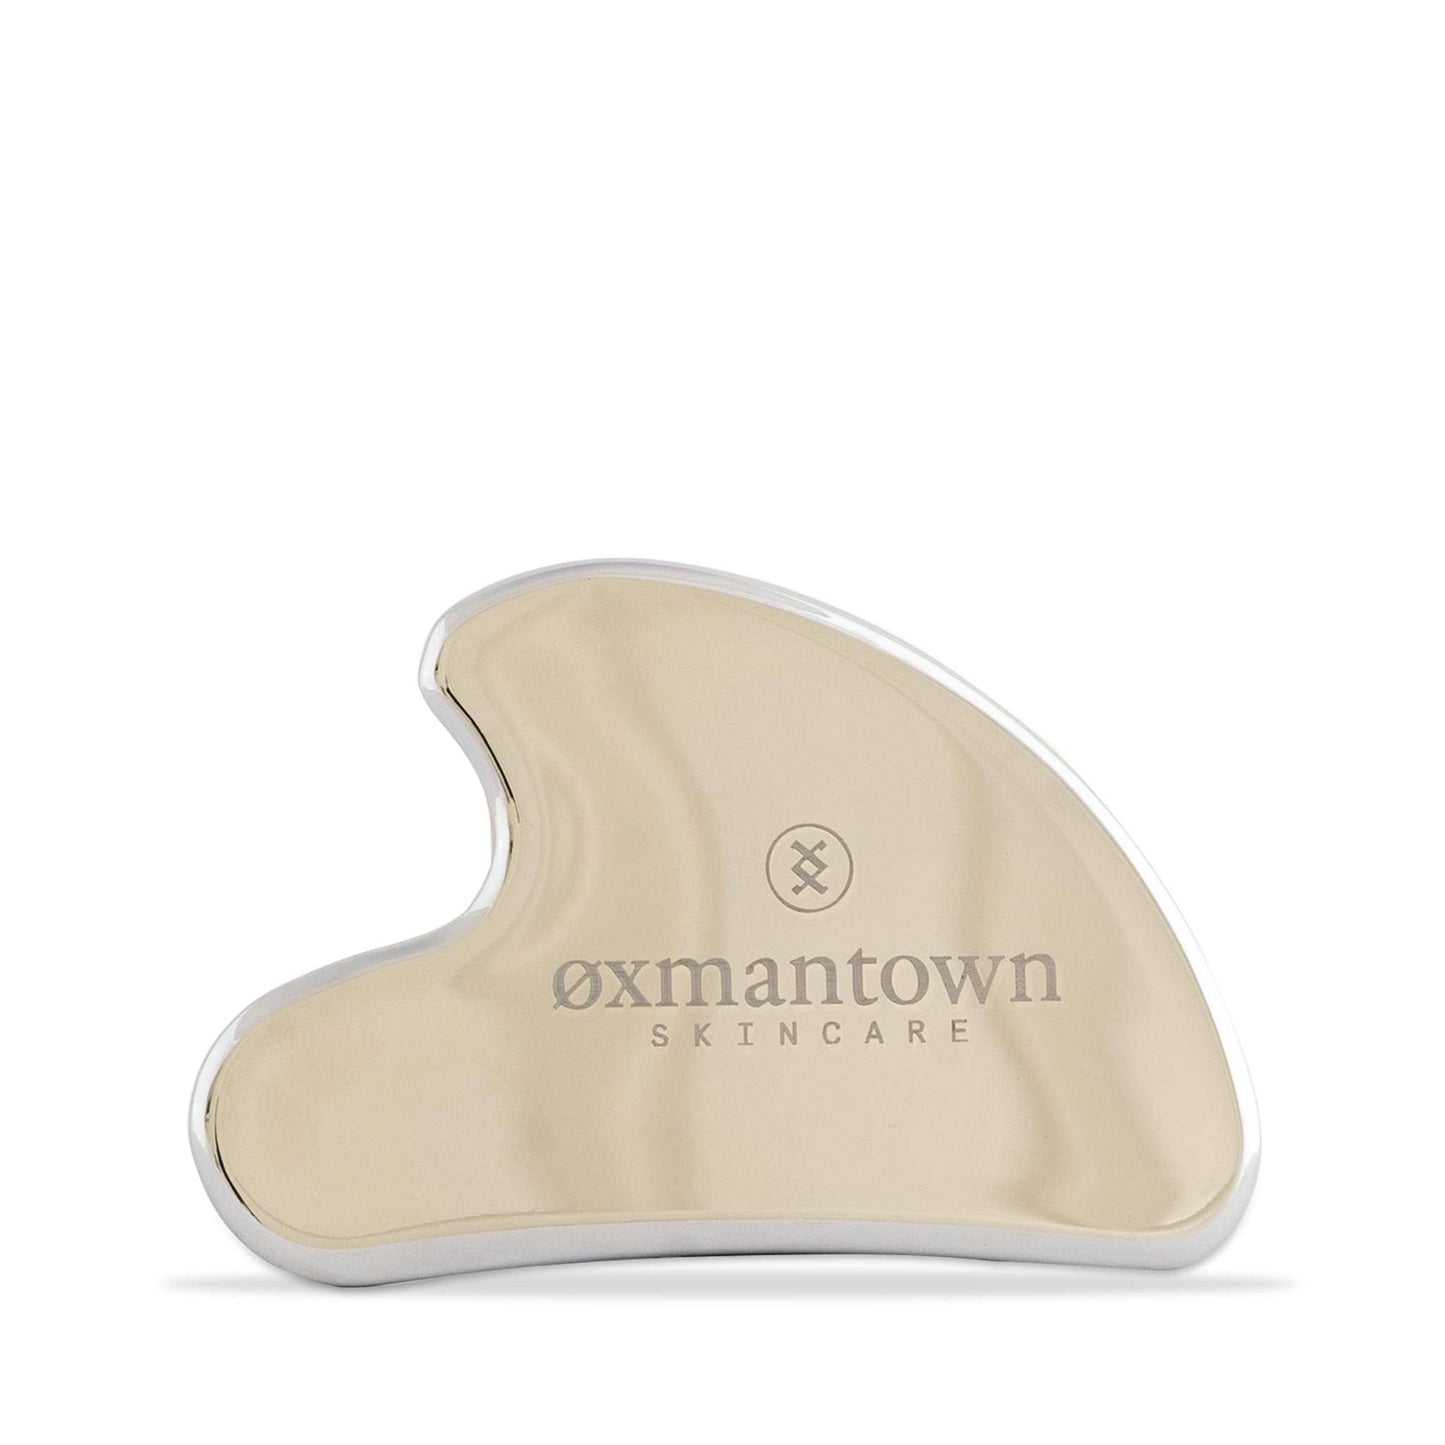 Oxmantown Skincare Stainless Steel Gua Sha Facial Tool - Oxmantown Skincare